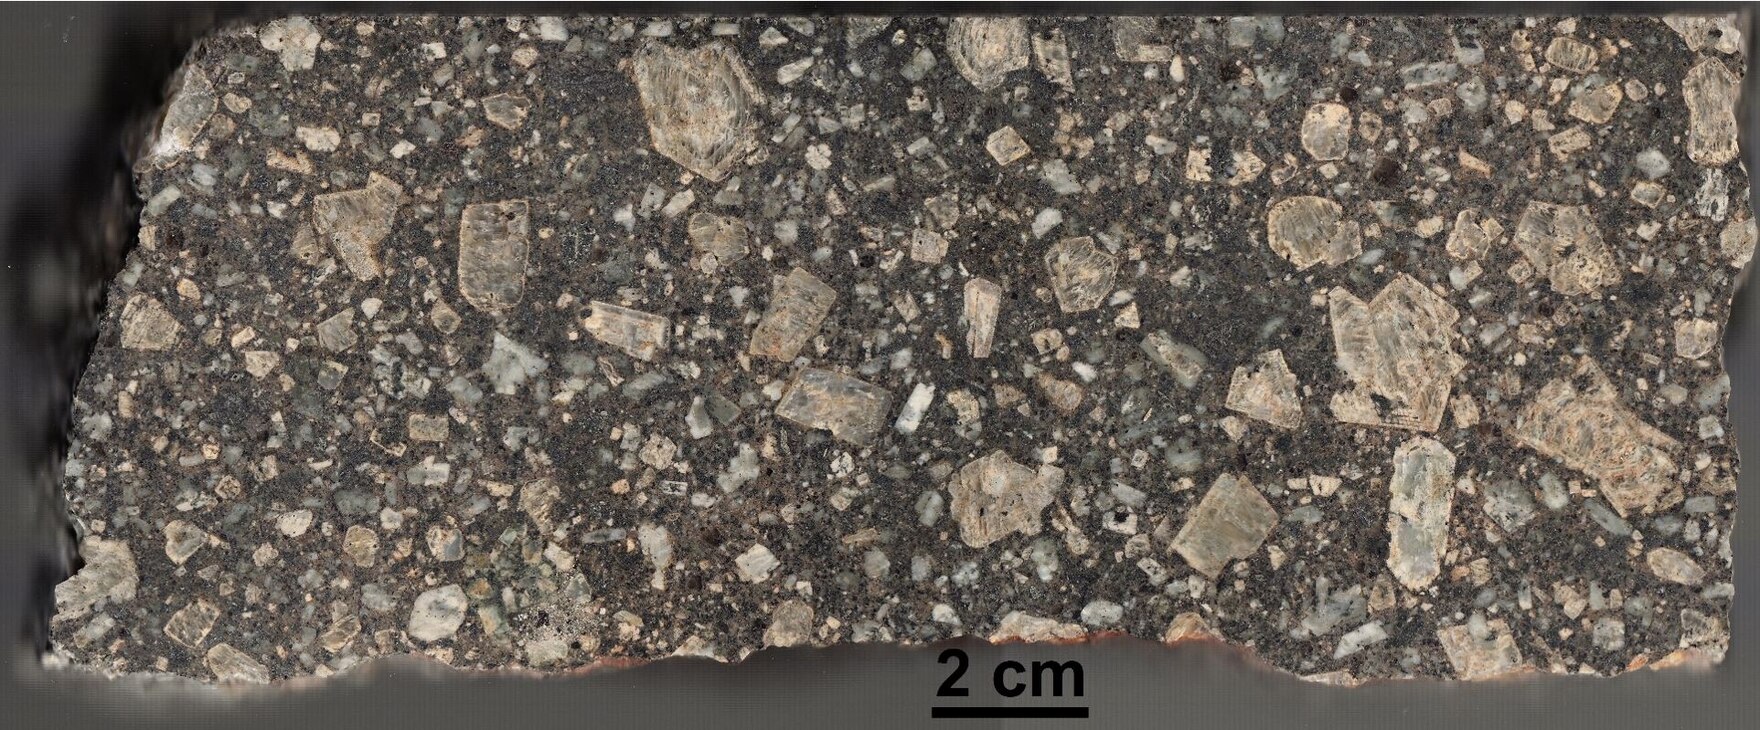 Handstück eines Granitporphyrs